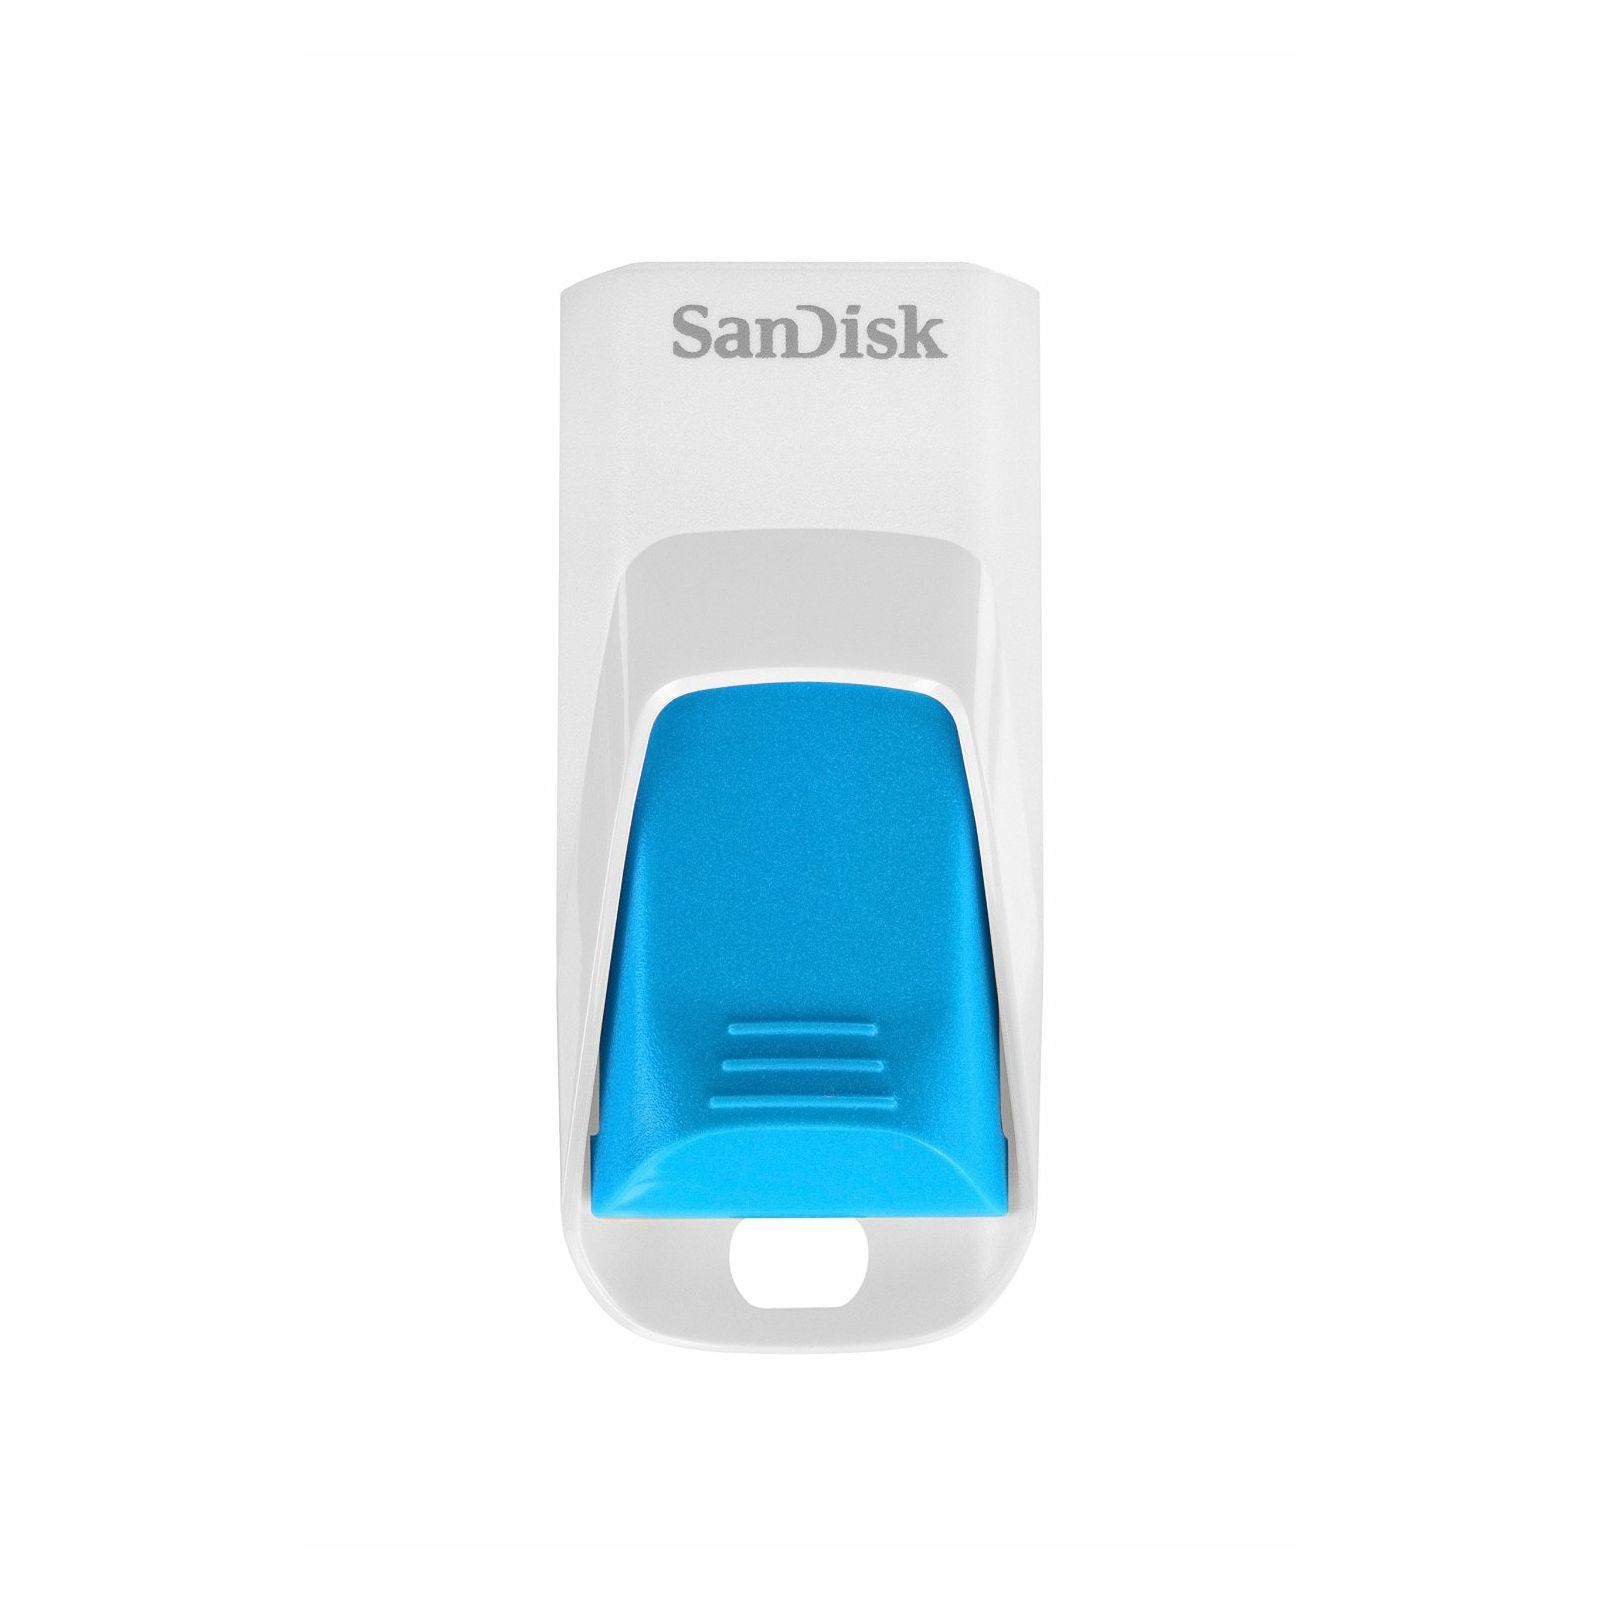 SanDisk Cruzer Edge 8GB White/Blue SDCZ51W-008G-B35B USB Memory Stick